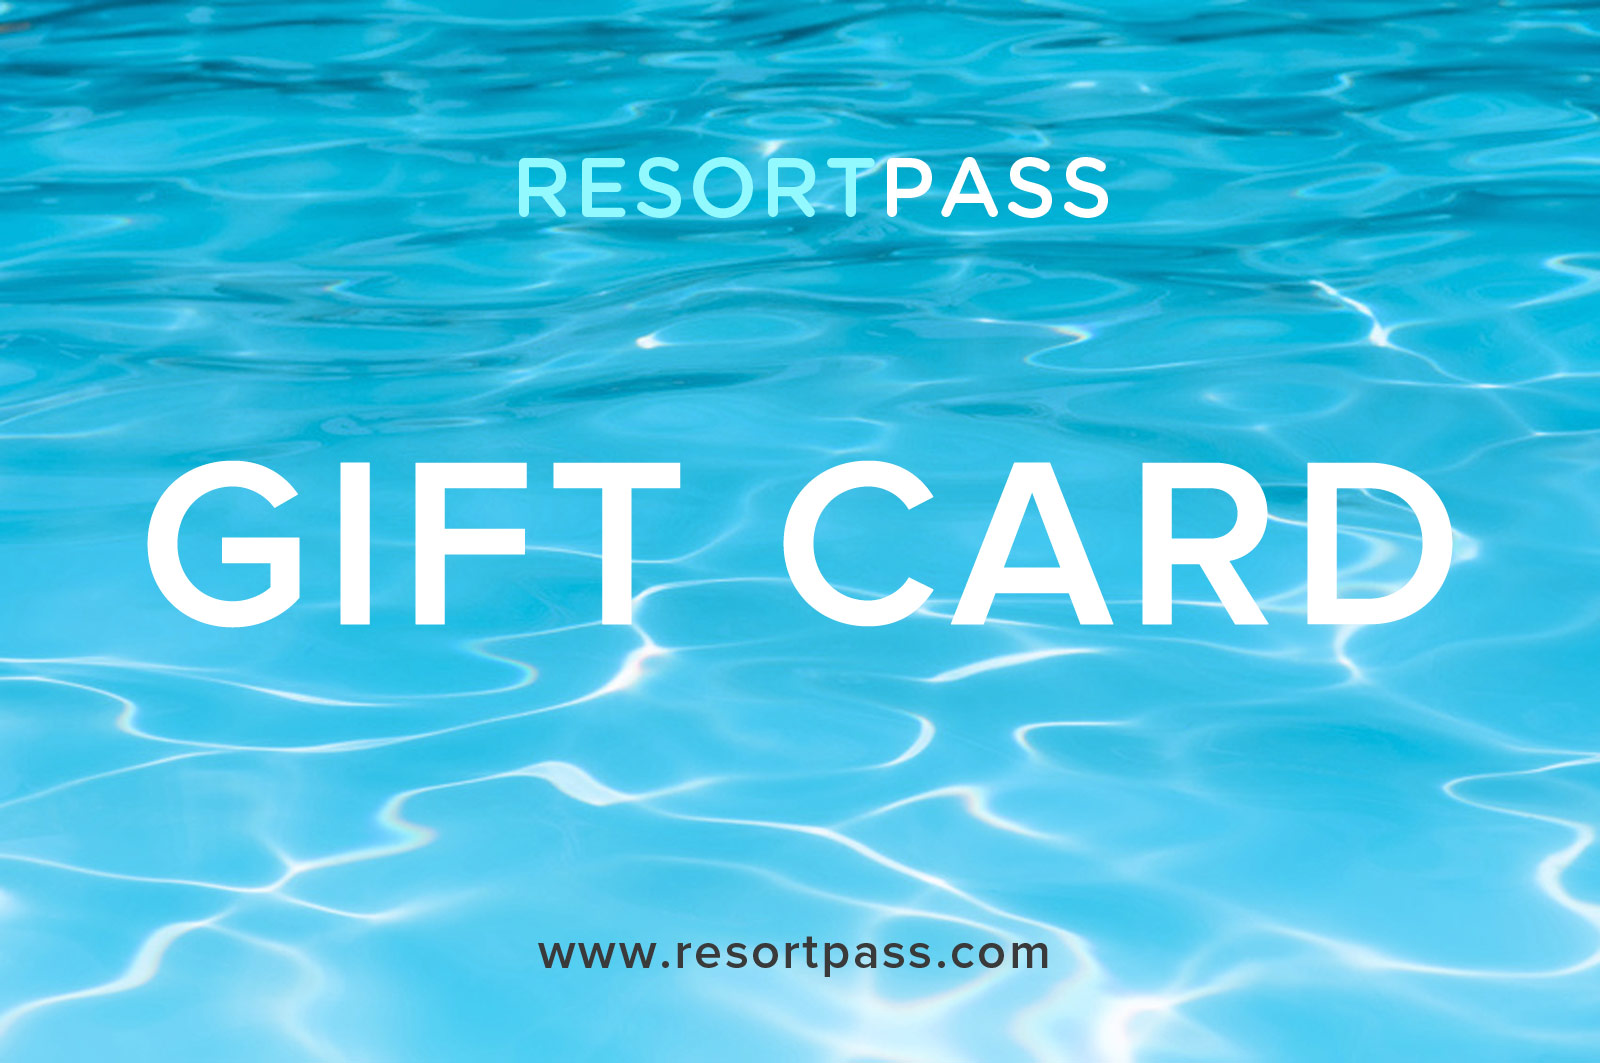 ResortPass gift card